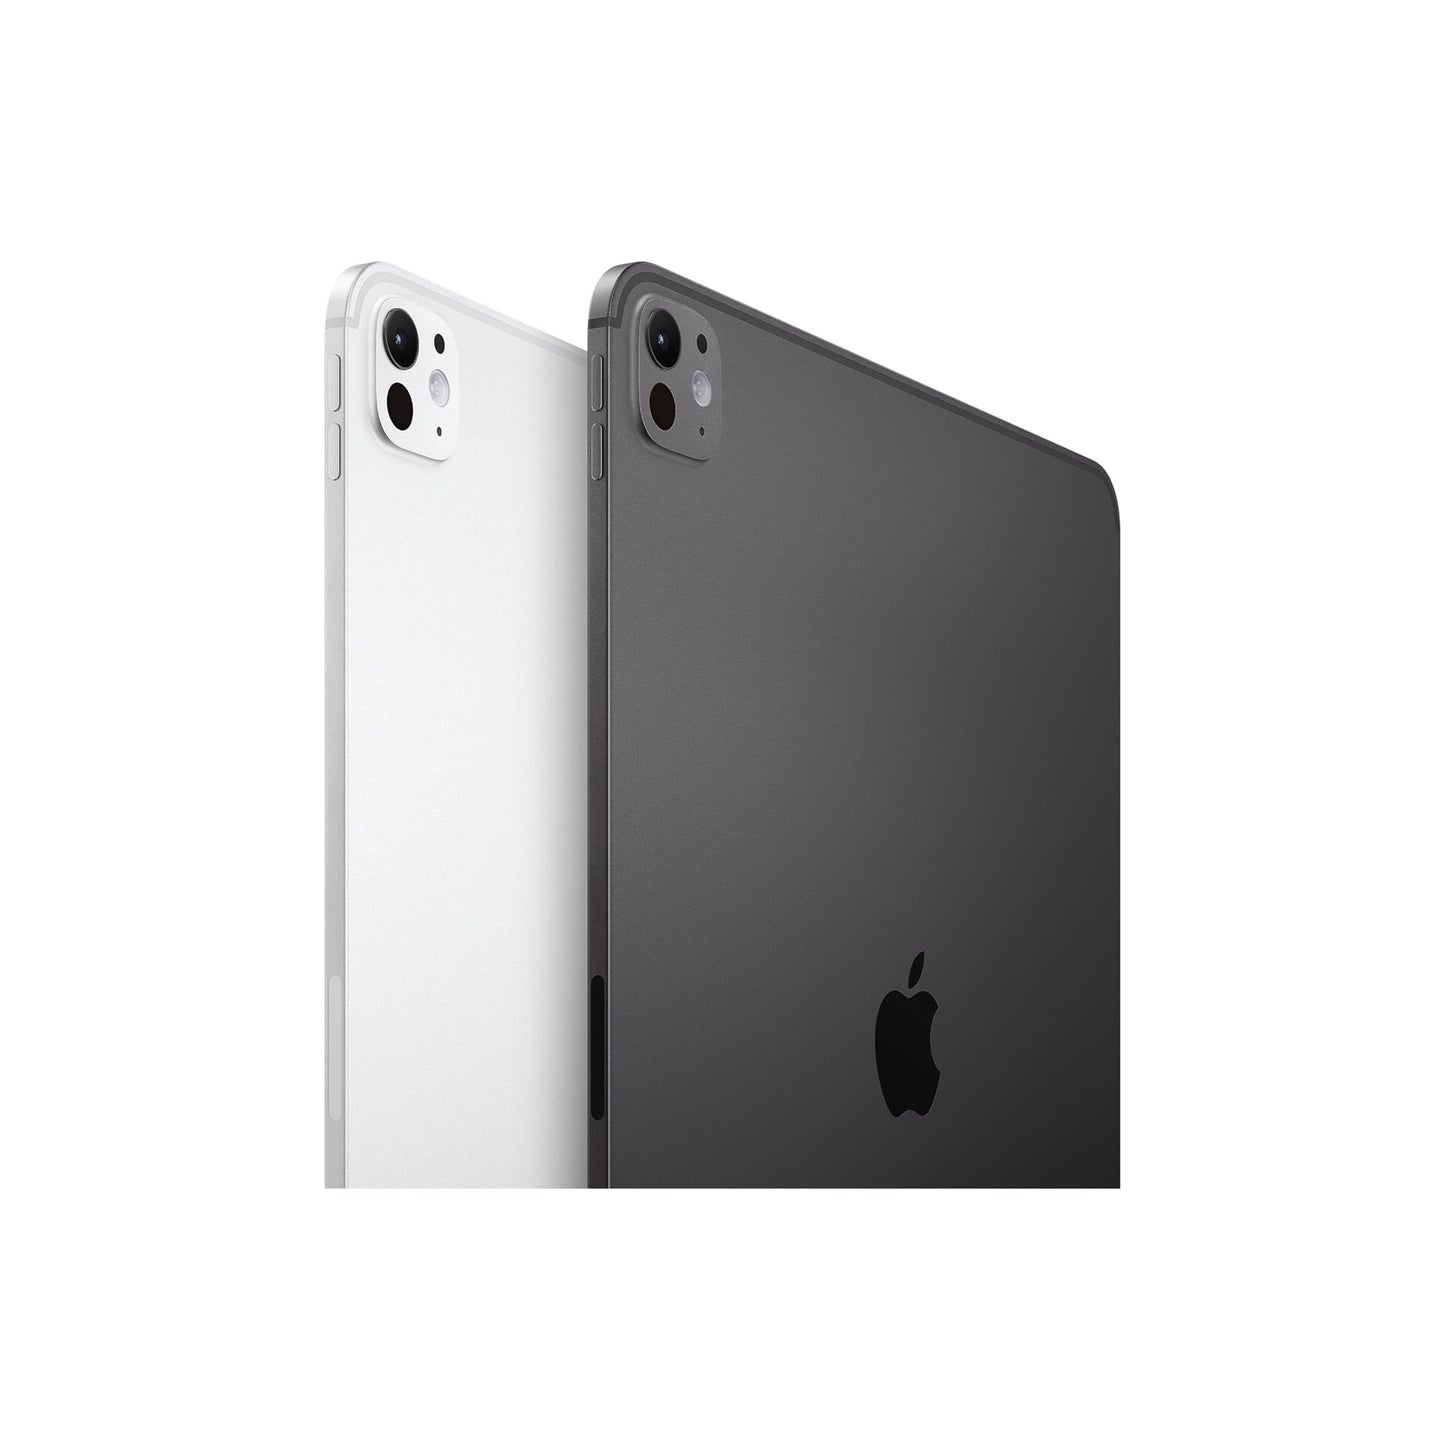 Apple iPad Pro 11 بوصة (M4): شاشة Ultra Retina XDR، 2 تيرابايت، كاميرا أمامية 12 ميجابكسل / كاميرا خلفية 12 ميجابكسل، ماسح ضوئي LiDAR، شبكة Wi-Fi 6E + 5G خلوية مع eSIM، معرف الوجه، عمر البطارية طوال اليوم - أسود فلكي